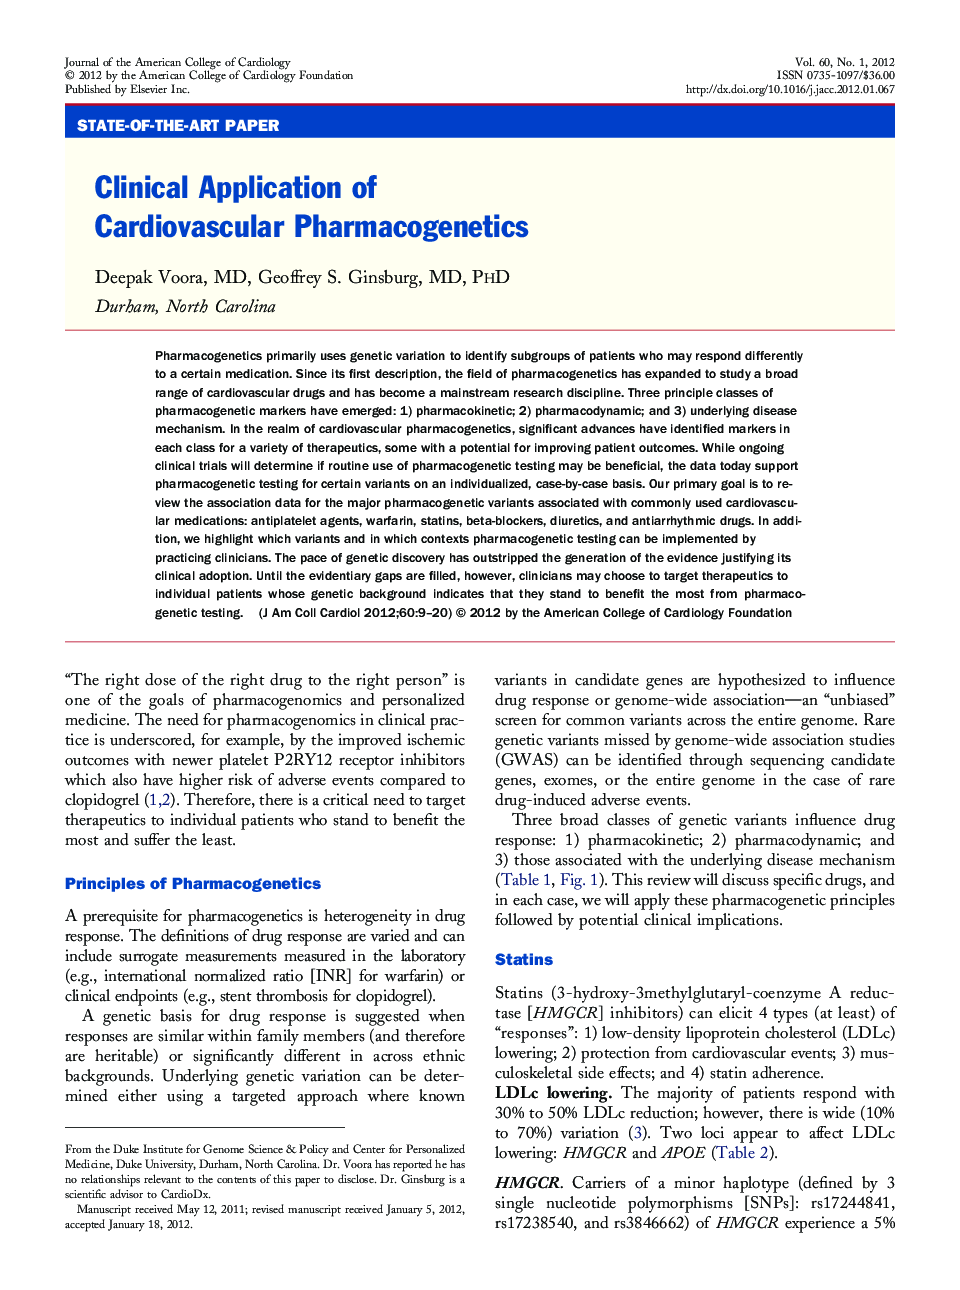 Clinical Application of Cardiovascular Pharmacogenetics 